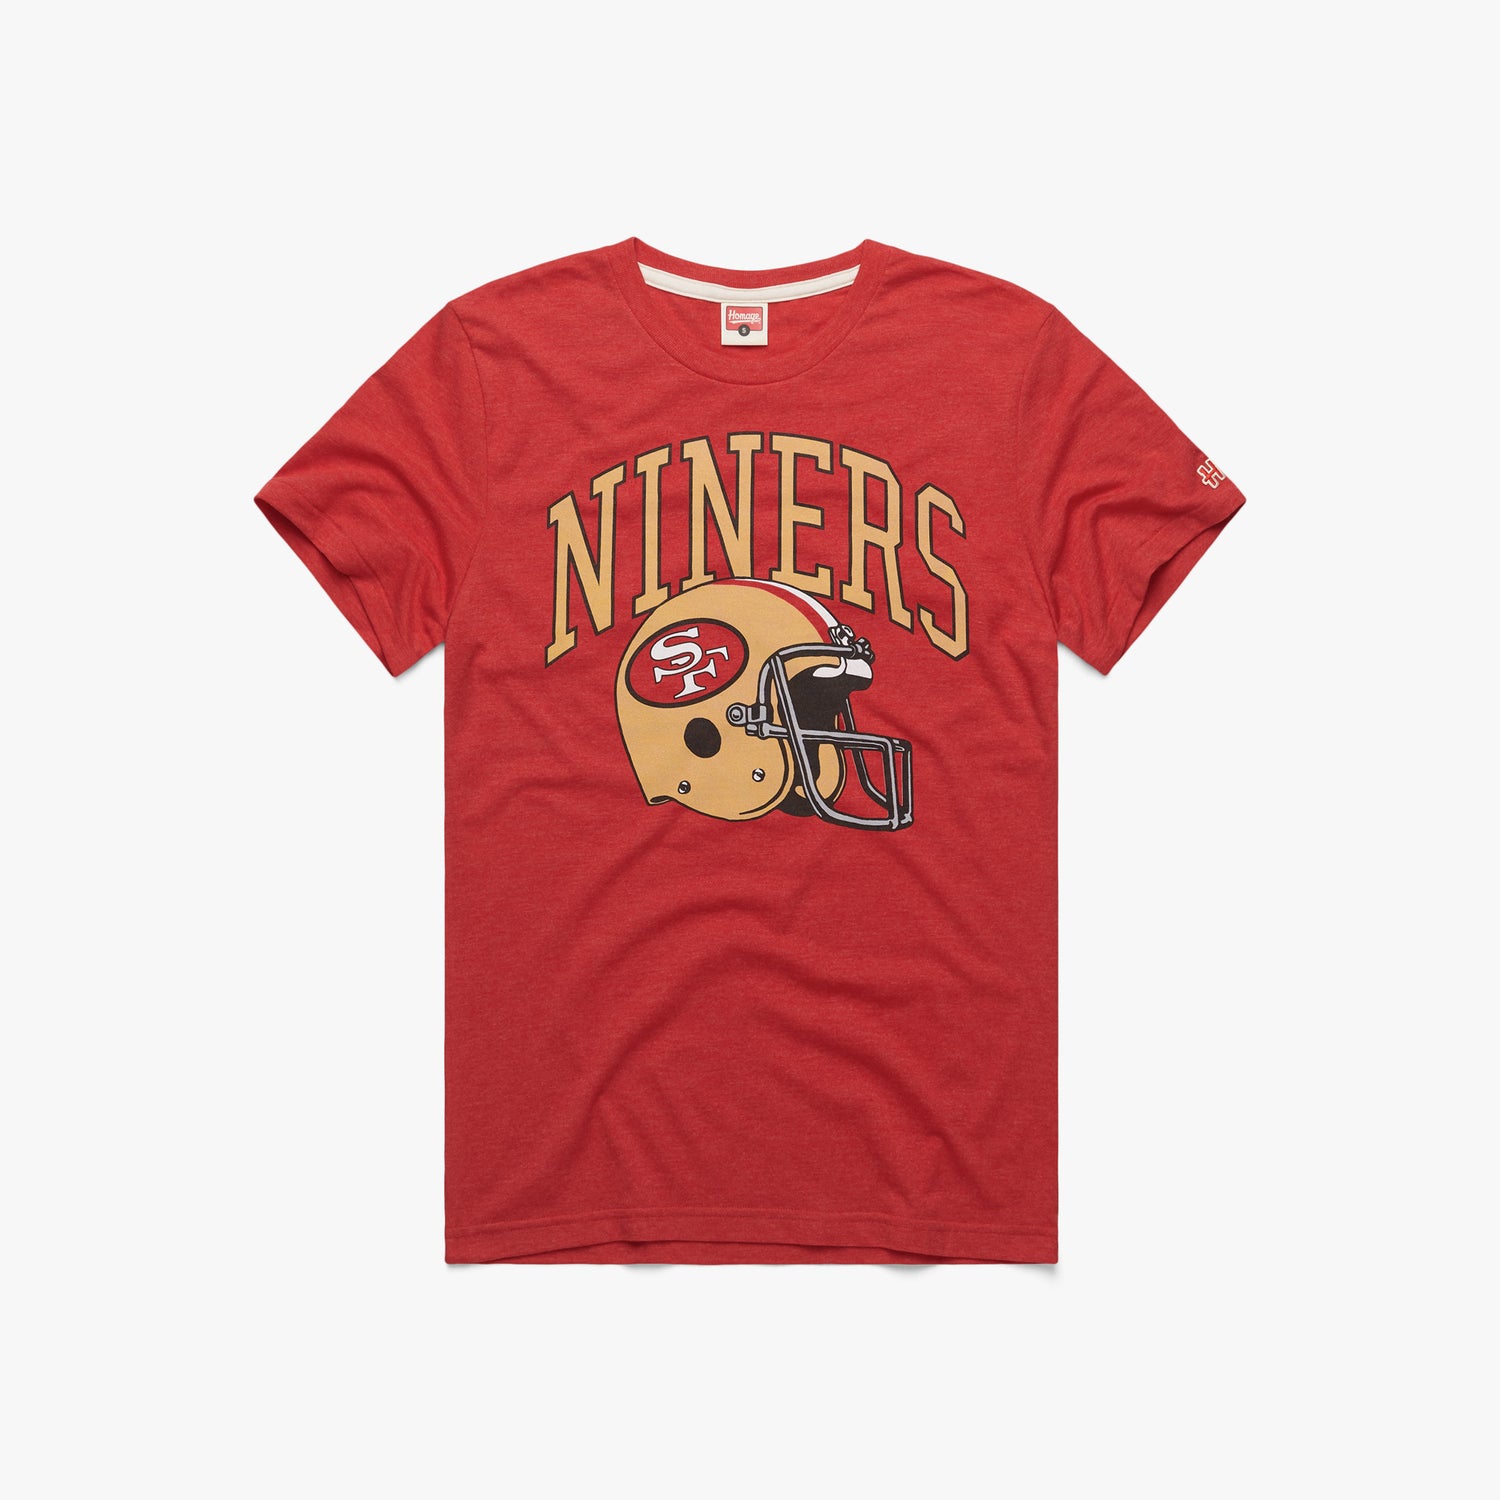 niners shirts